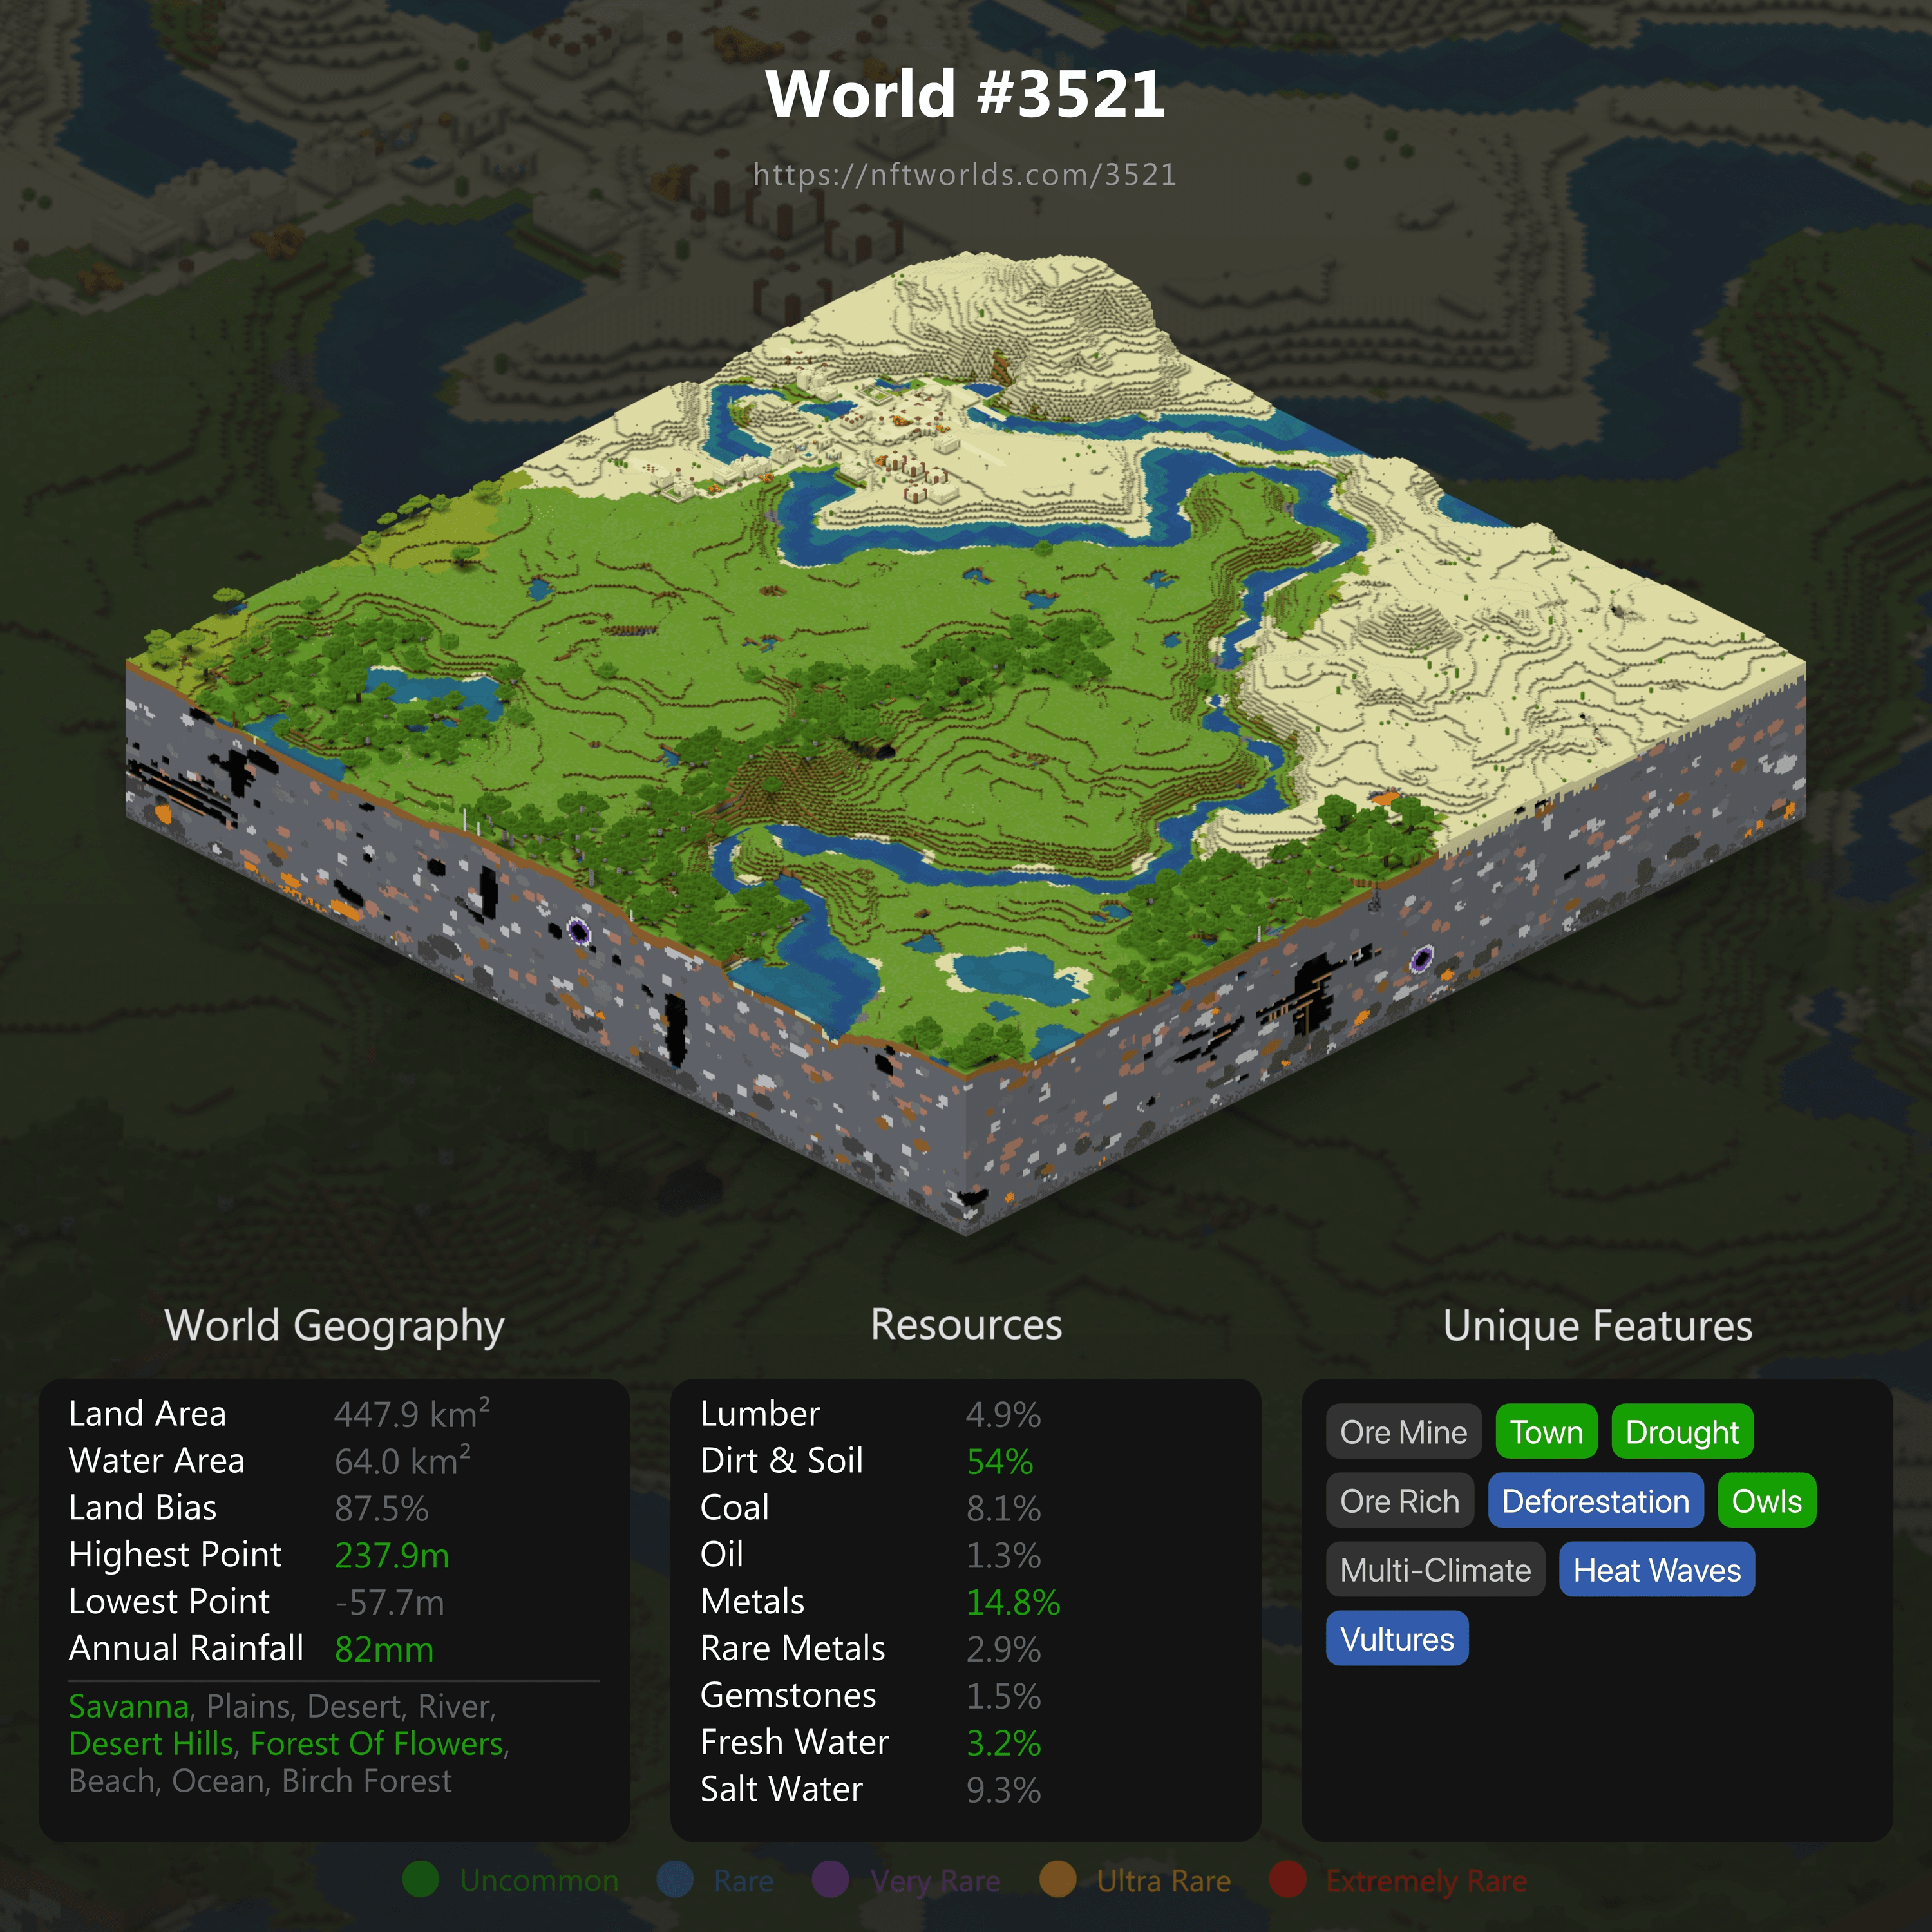 World #3521